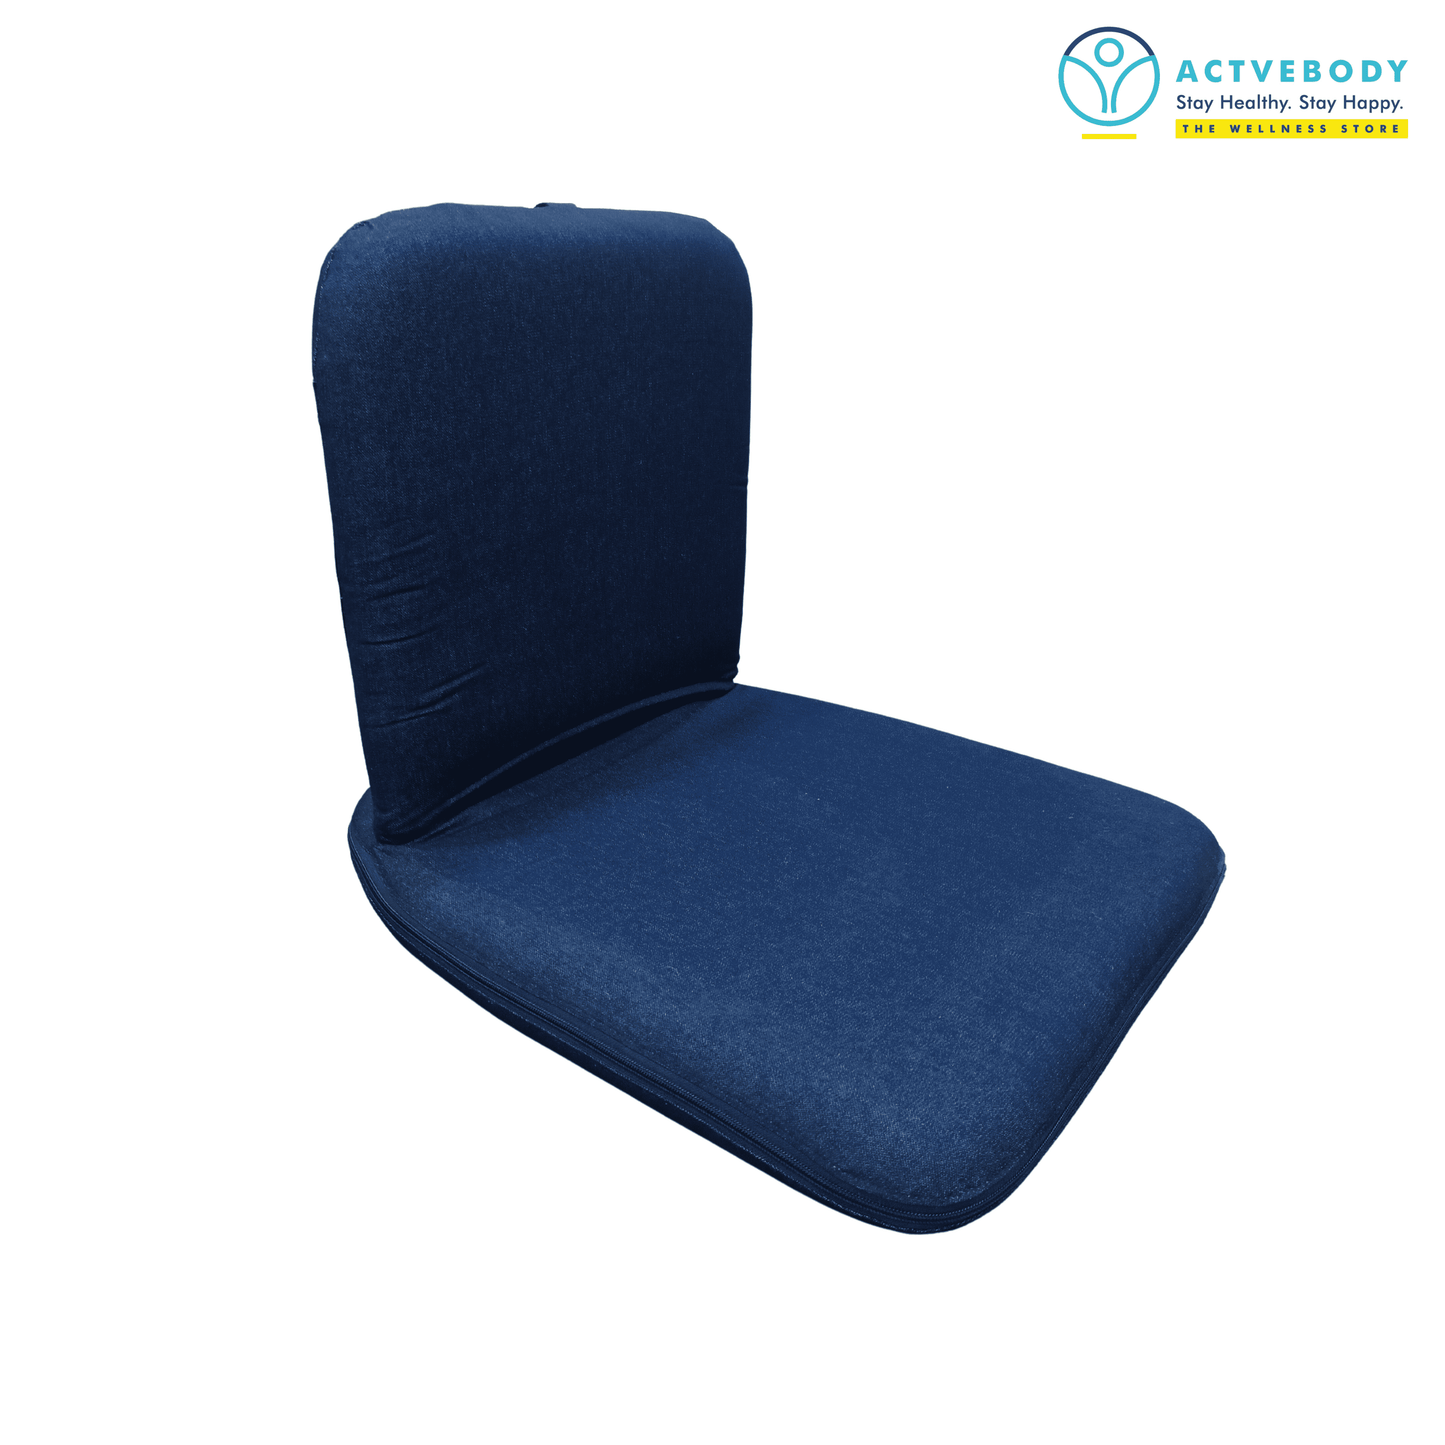 Actvebody Elite Meditation Chair Blue Demin | Actvebody